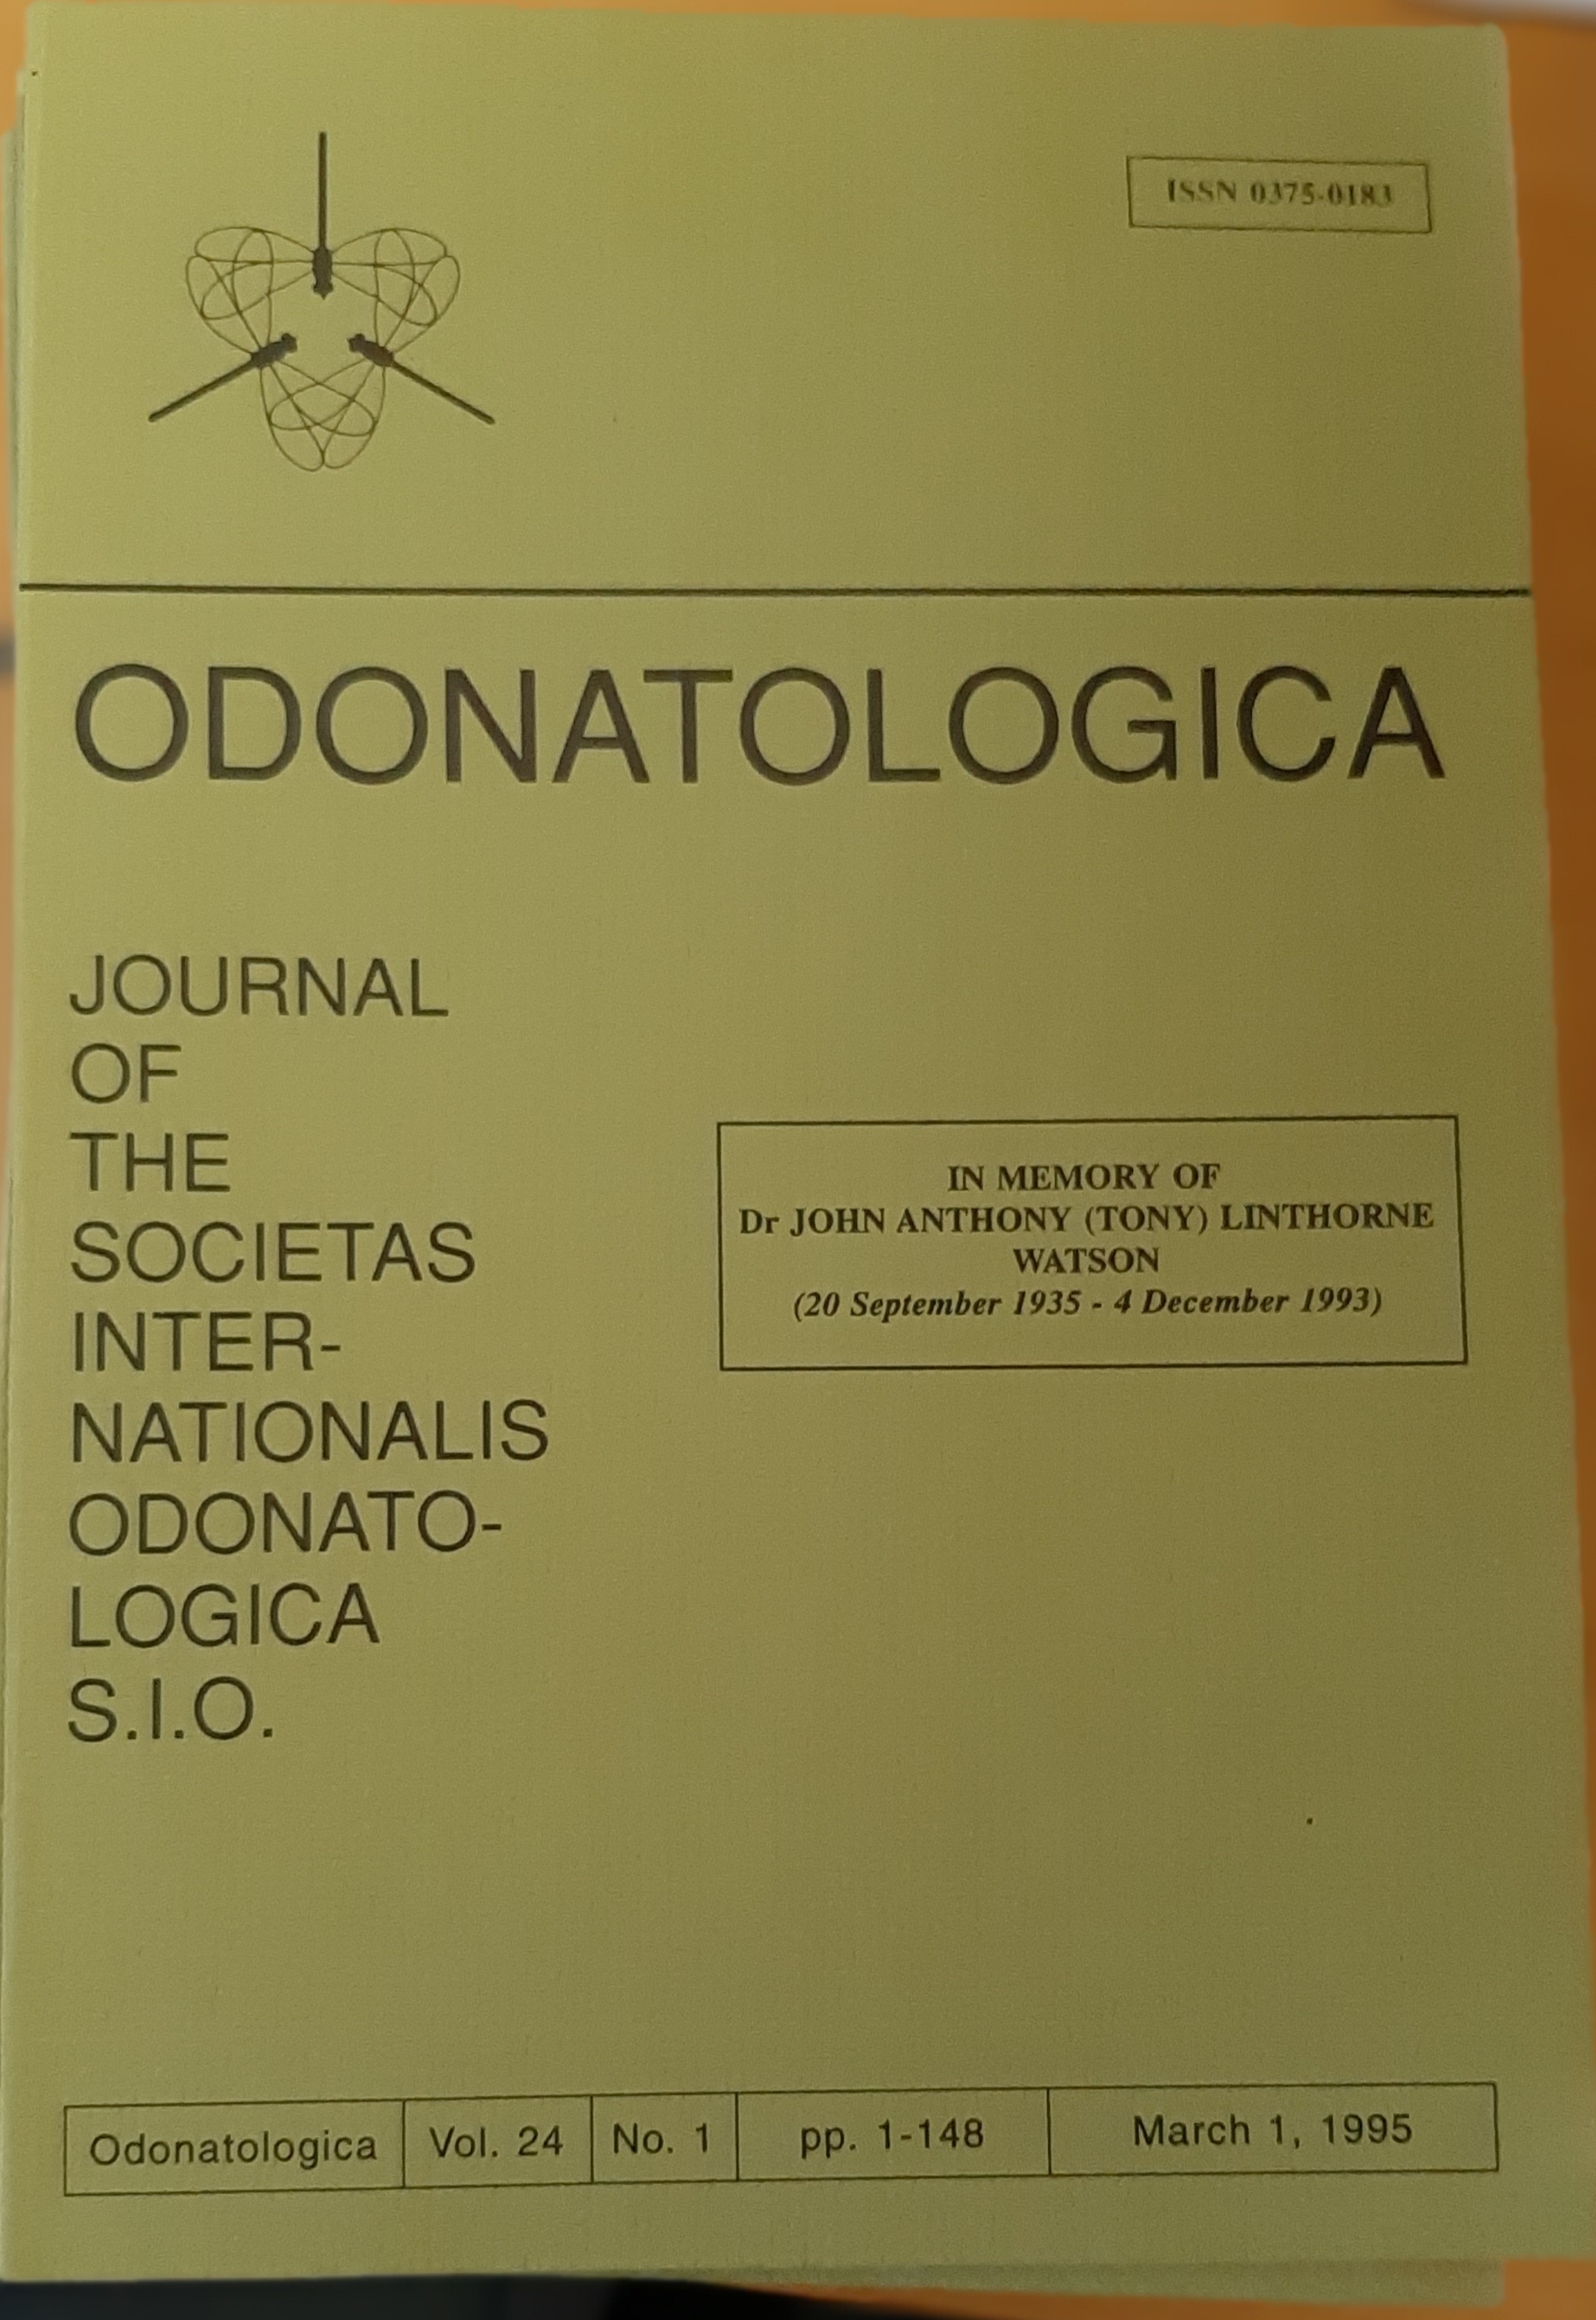 Odonatologica 1995/24. évf. 1. szám Journal of the Societas Internationalis Odonatologica S.I.O. (Rippl-Rónai Múzeum RR-F)